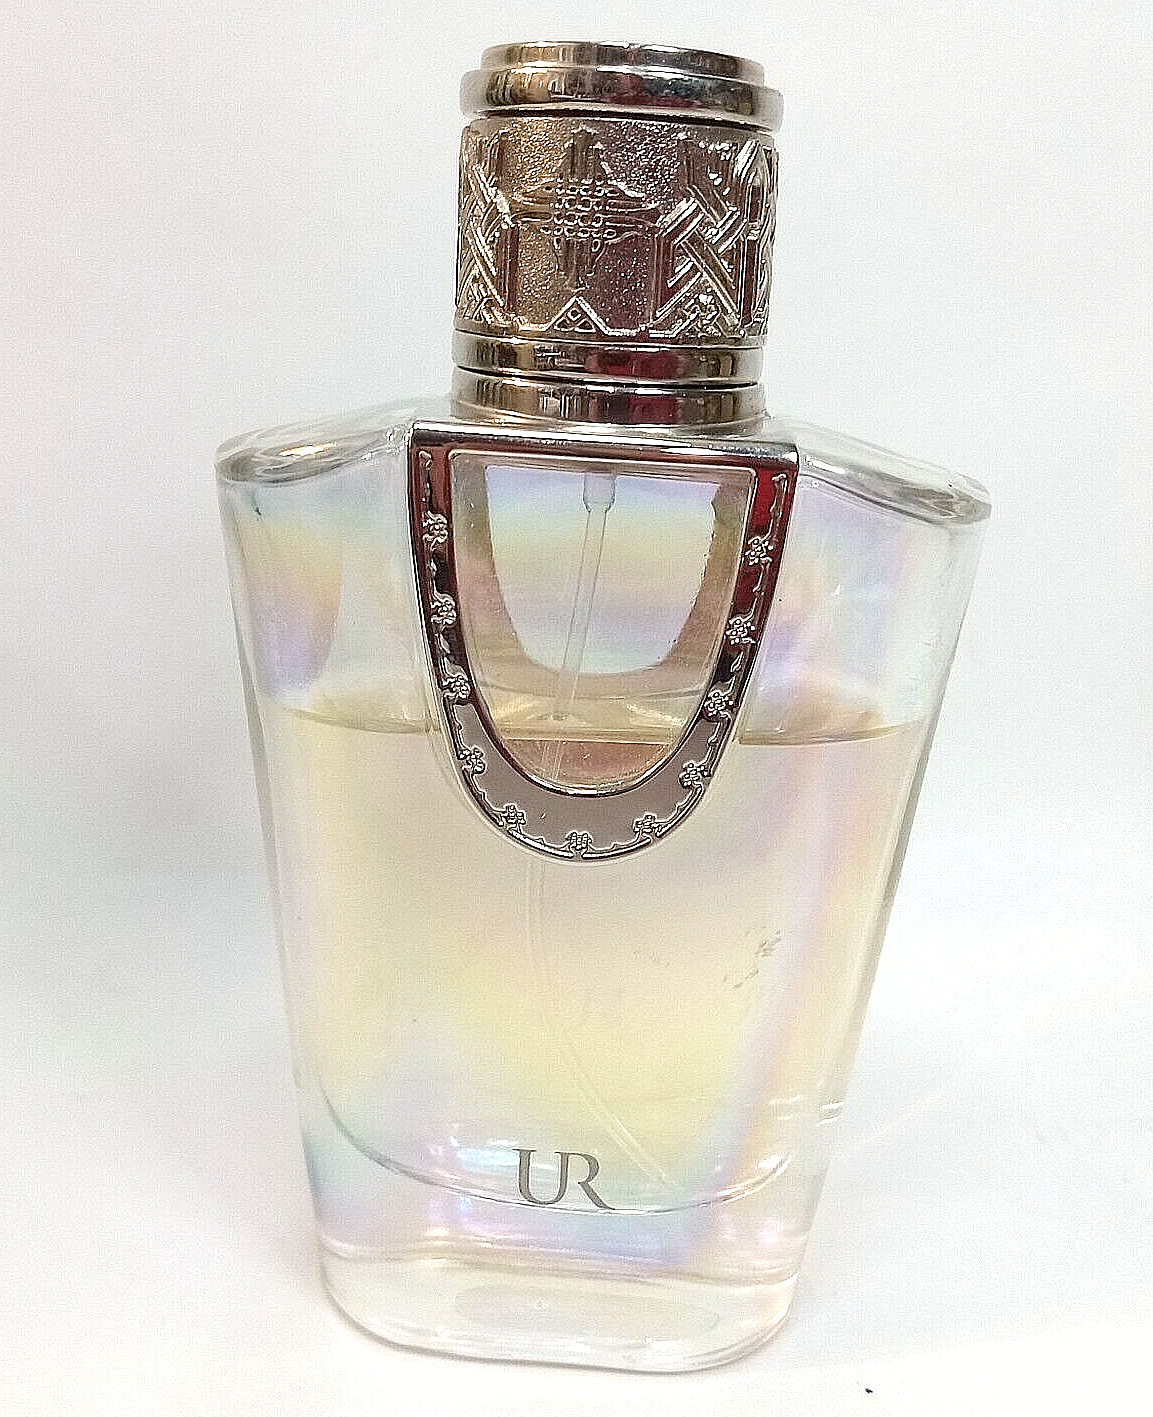 UR Usher Eau de Parfum Spray 1.7 oz. No box IRIDESCENT BOTTLE